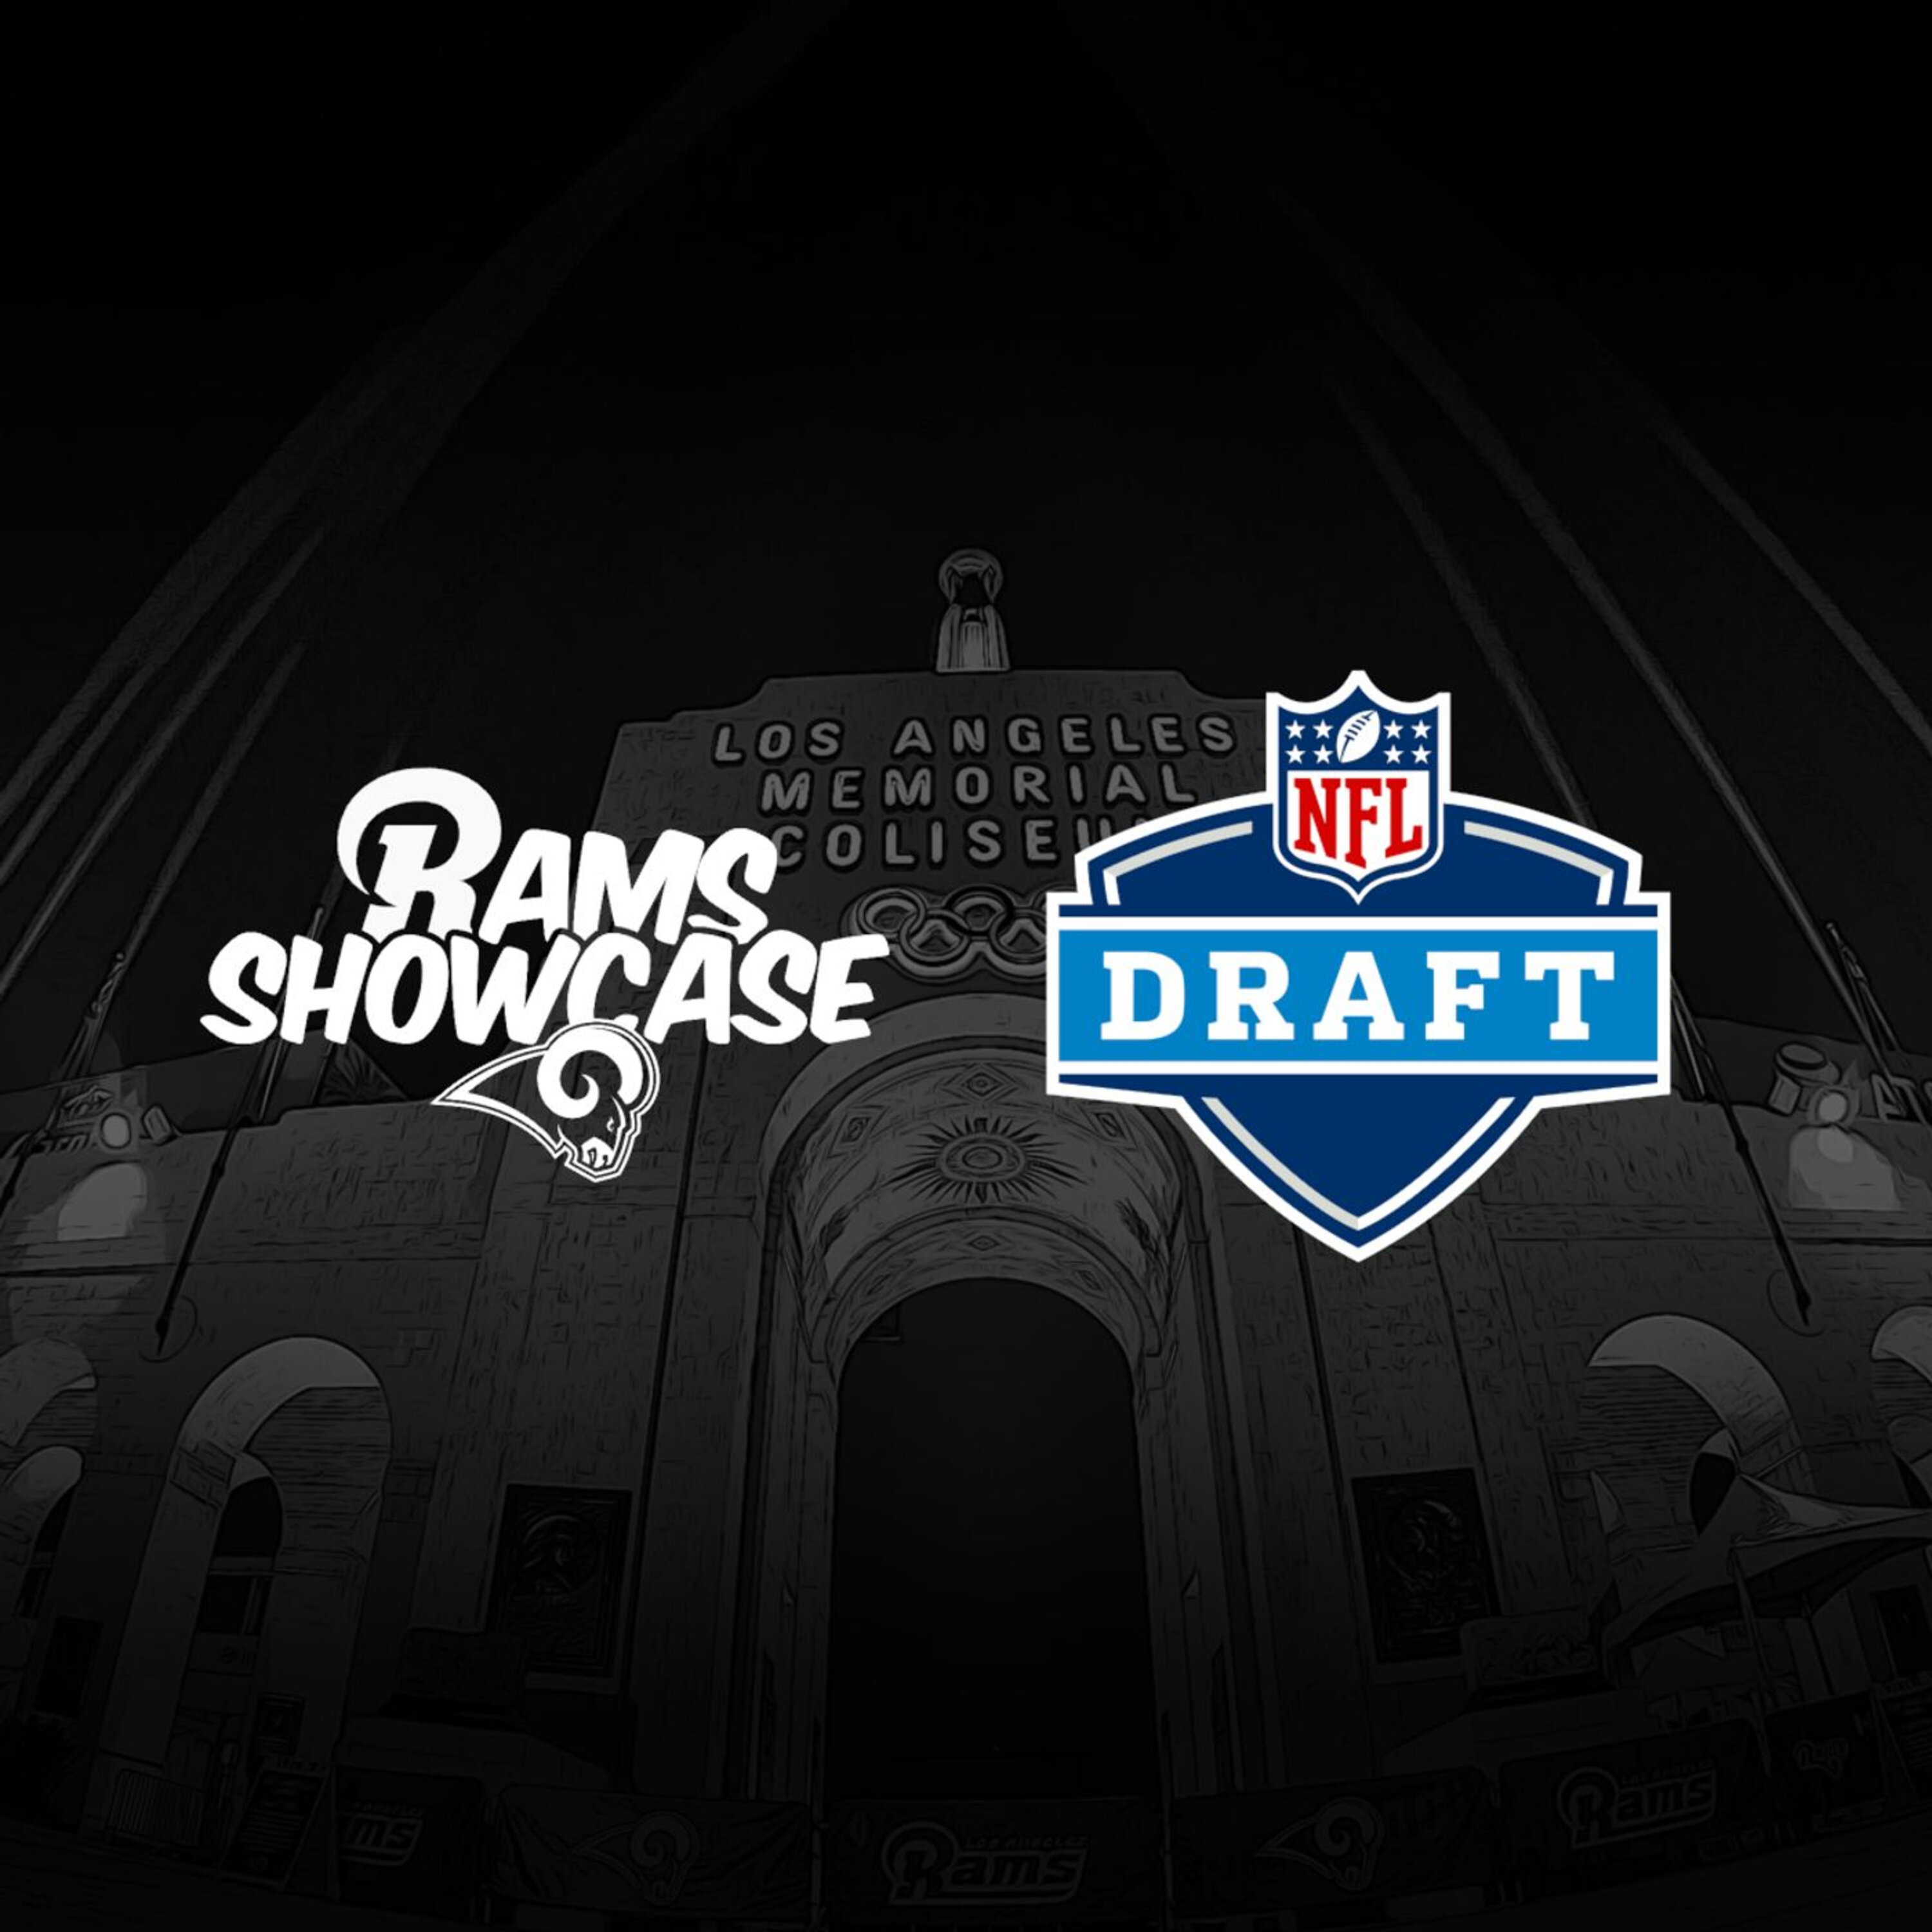 Rams Showcase - 2019 NFL Draft